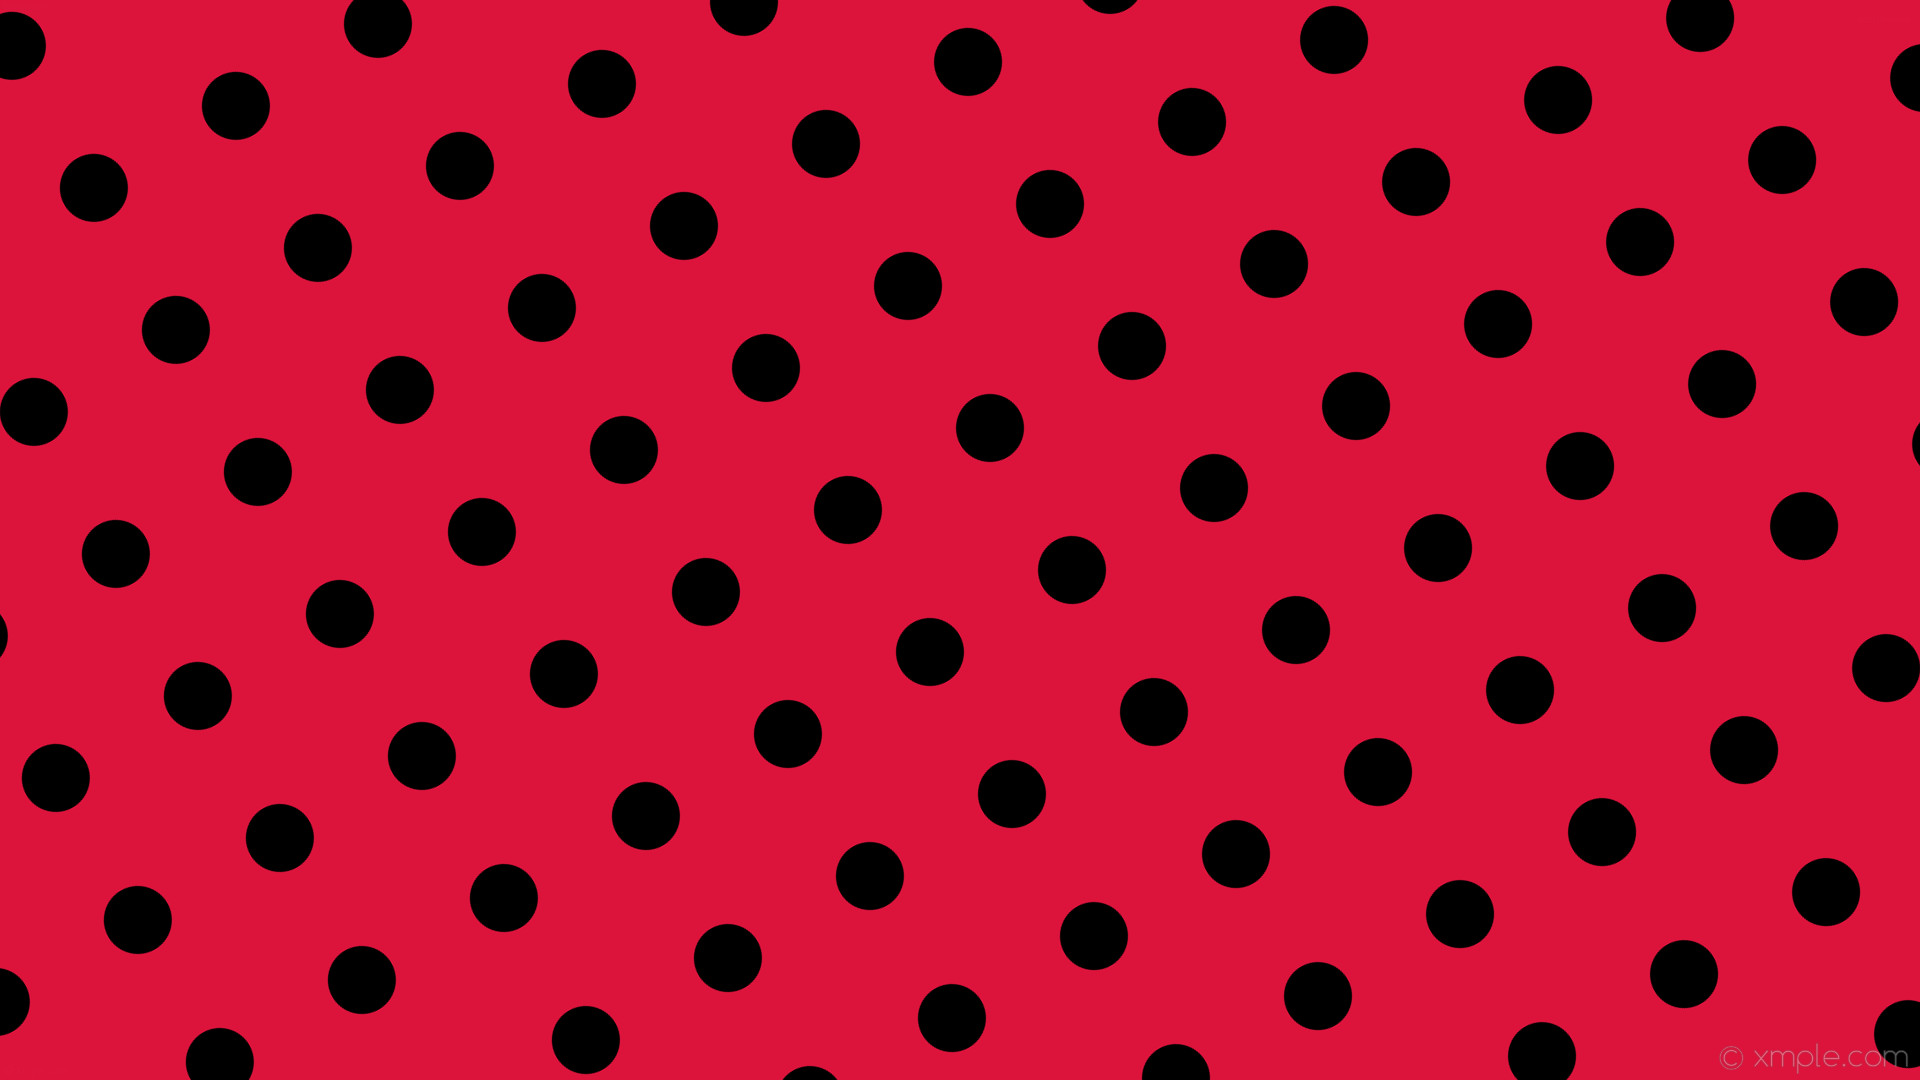 1920x1080 wallpaper red polka dots black spots crimson #dc143c #000000 30Â° 68px 164px